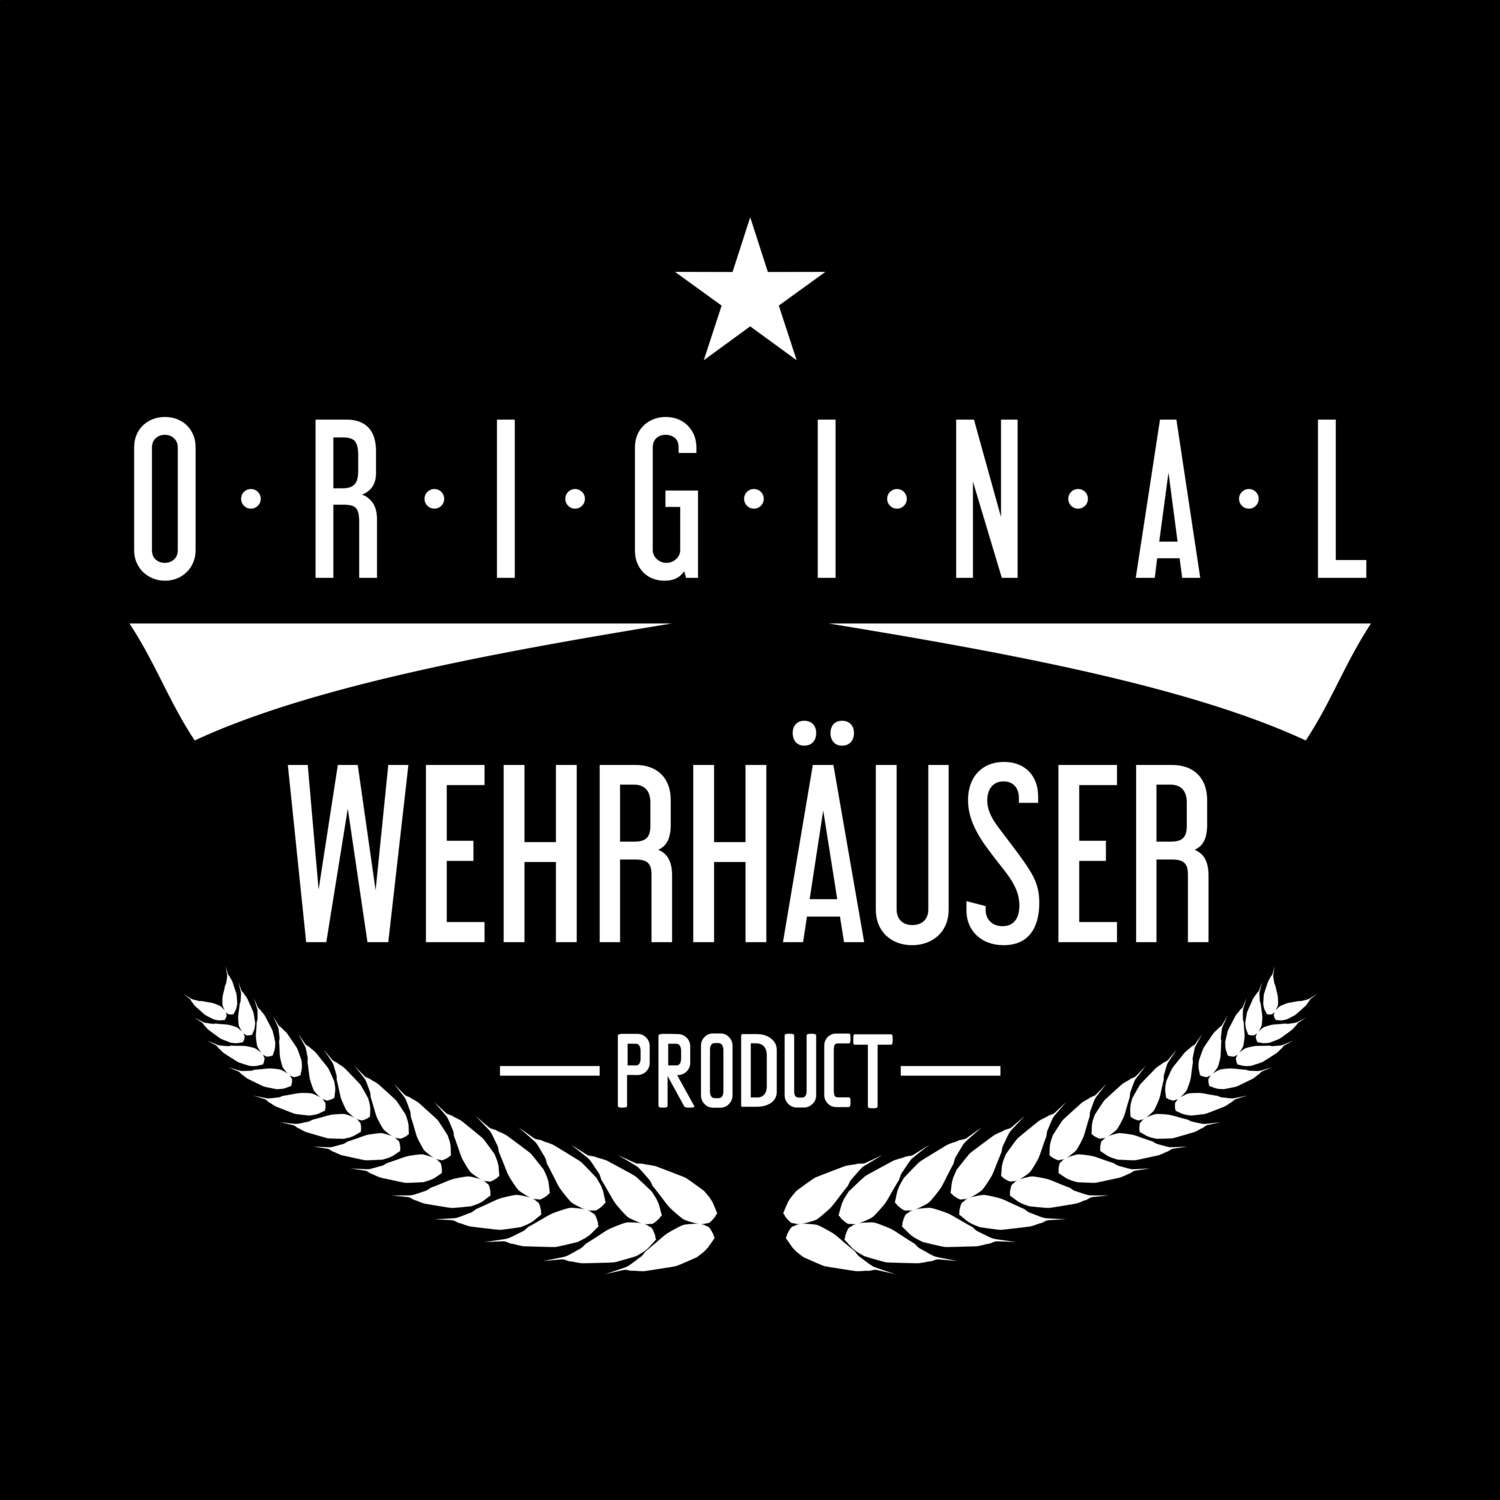 Wehrhäuser T-Shirt »Original Product«